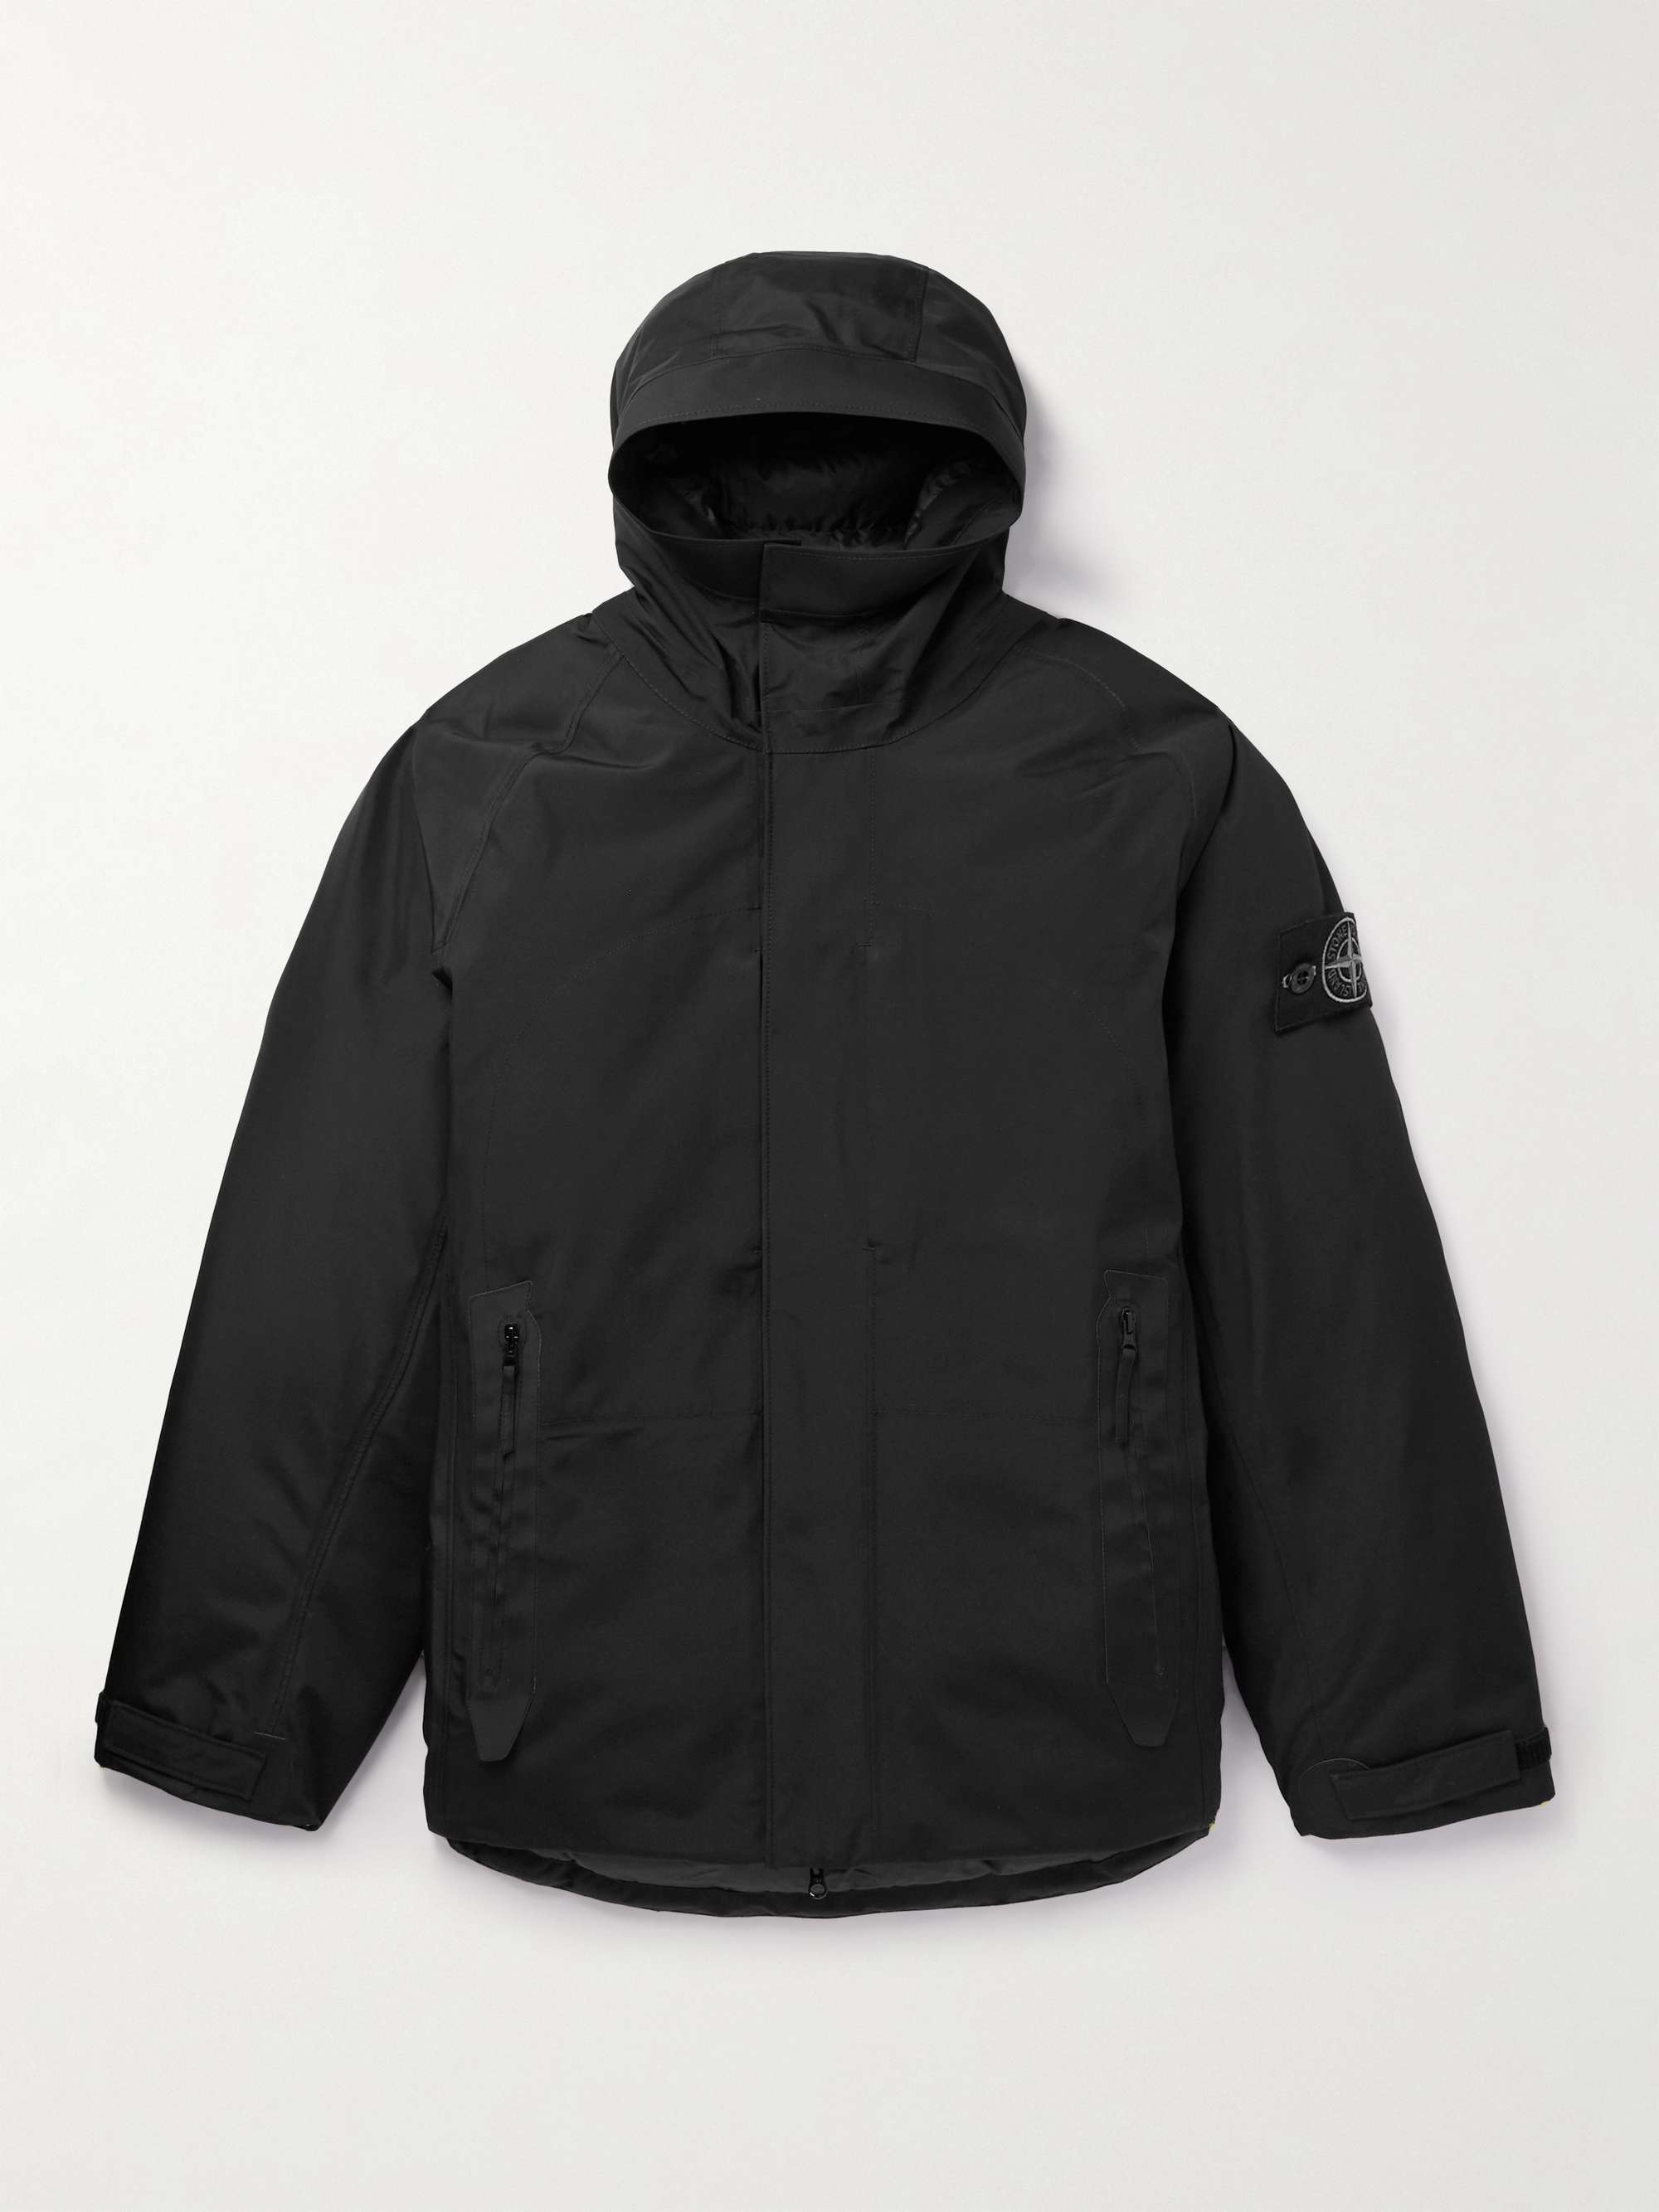 STONE ISLAND Logo-Appliquéd Recycled GORE-TEX® Hooded Down Jacket for Men |  MR PORTER